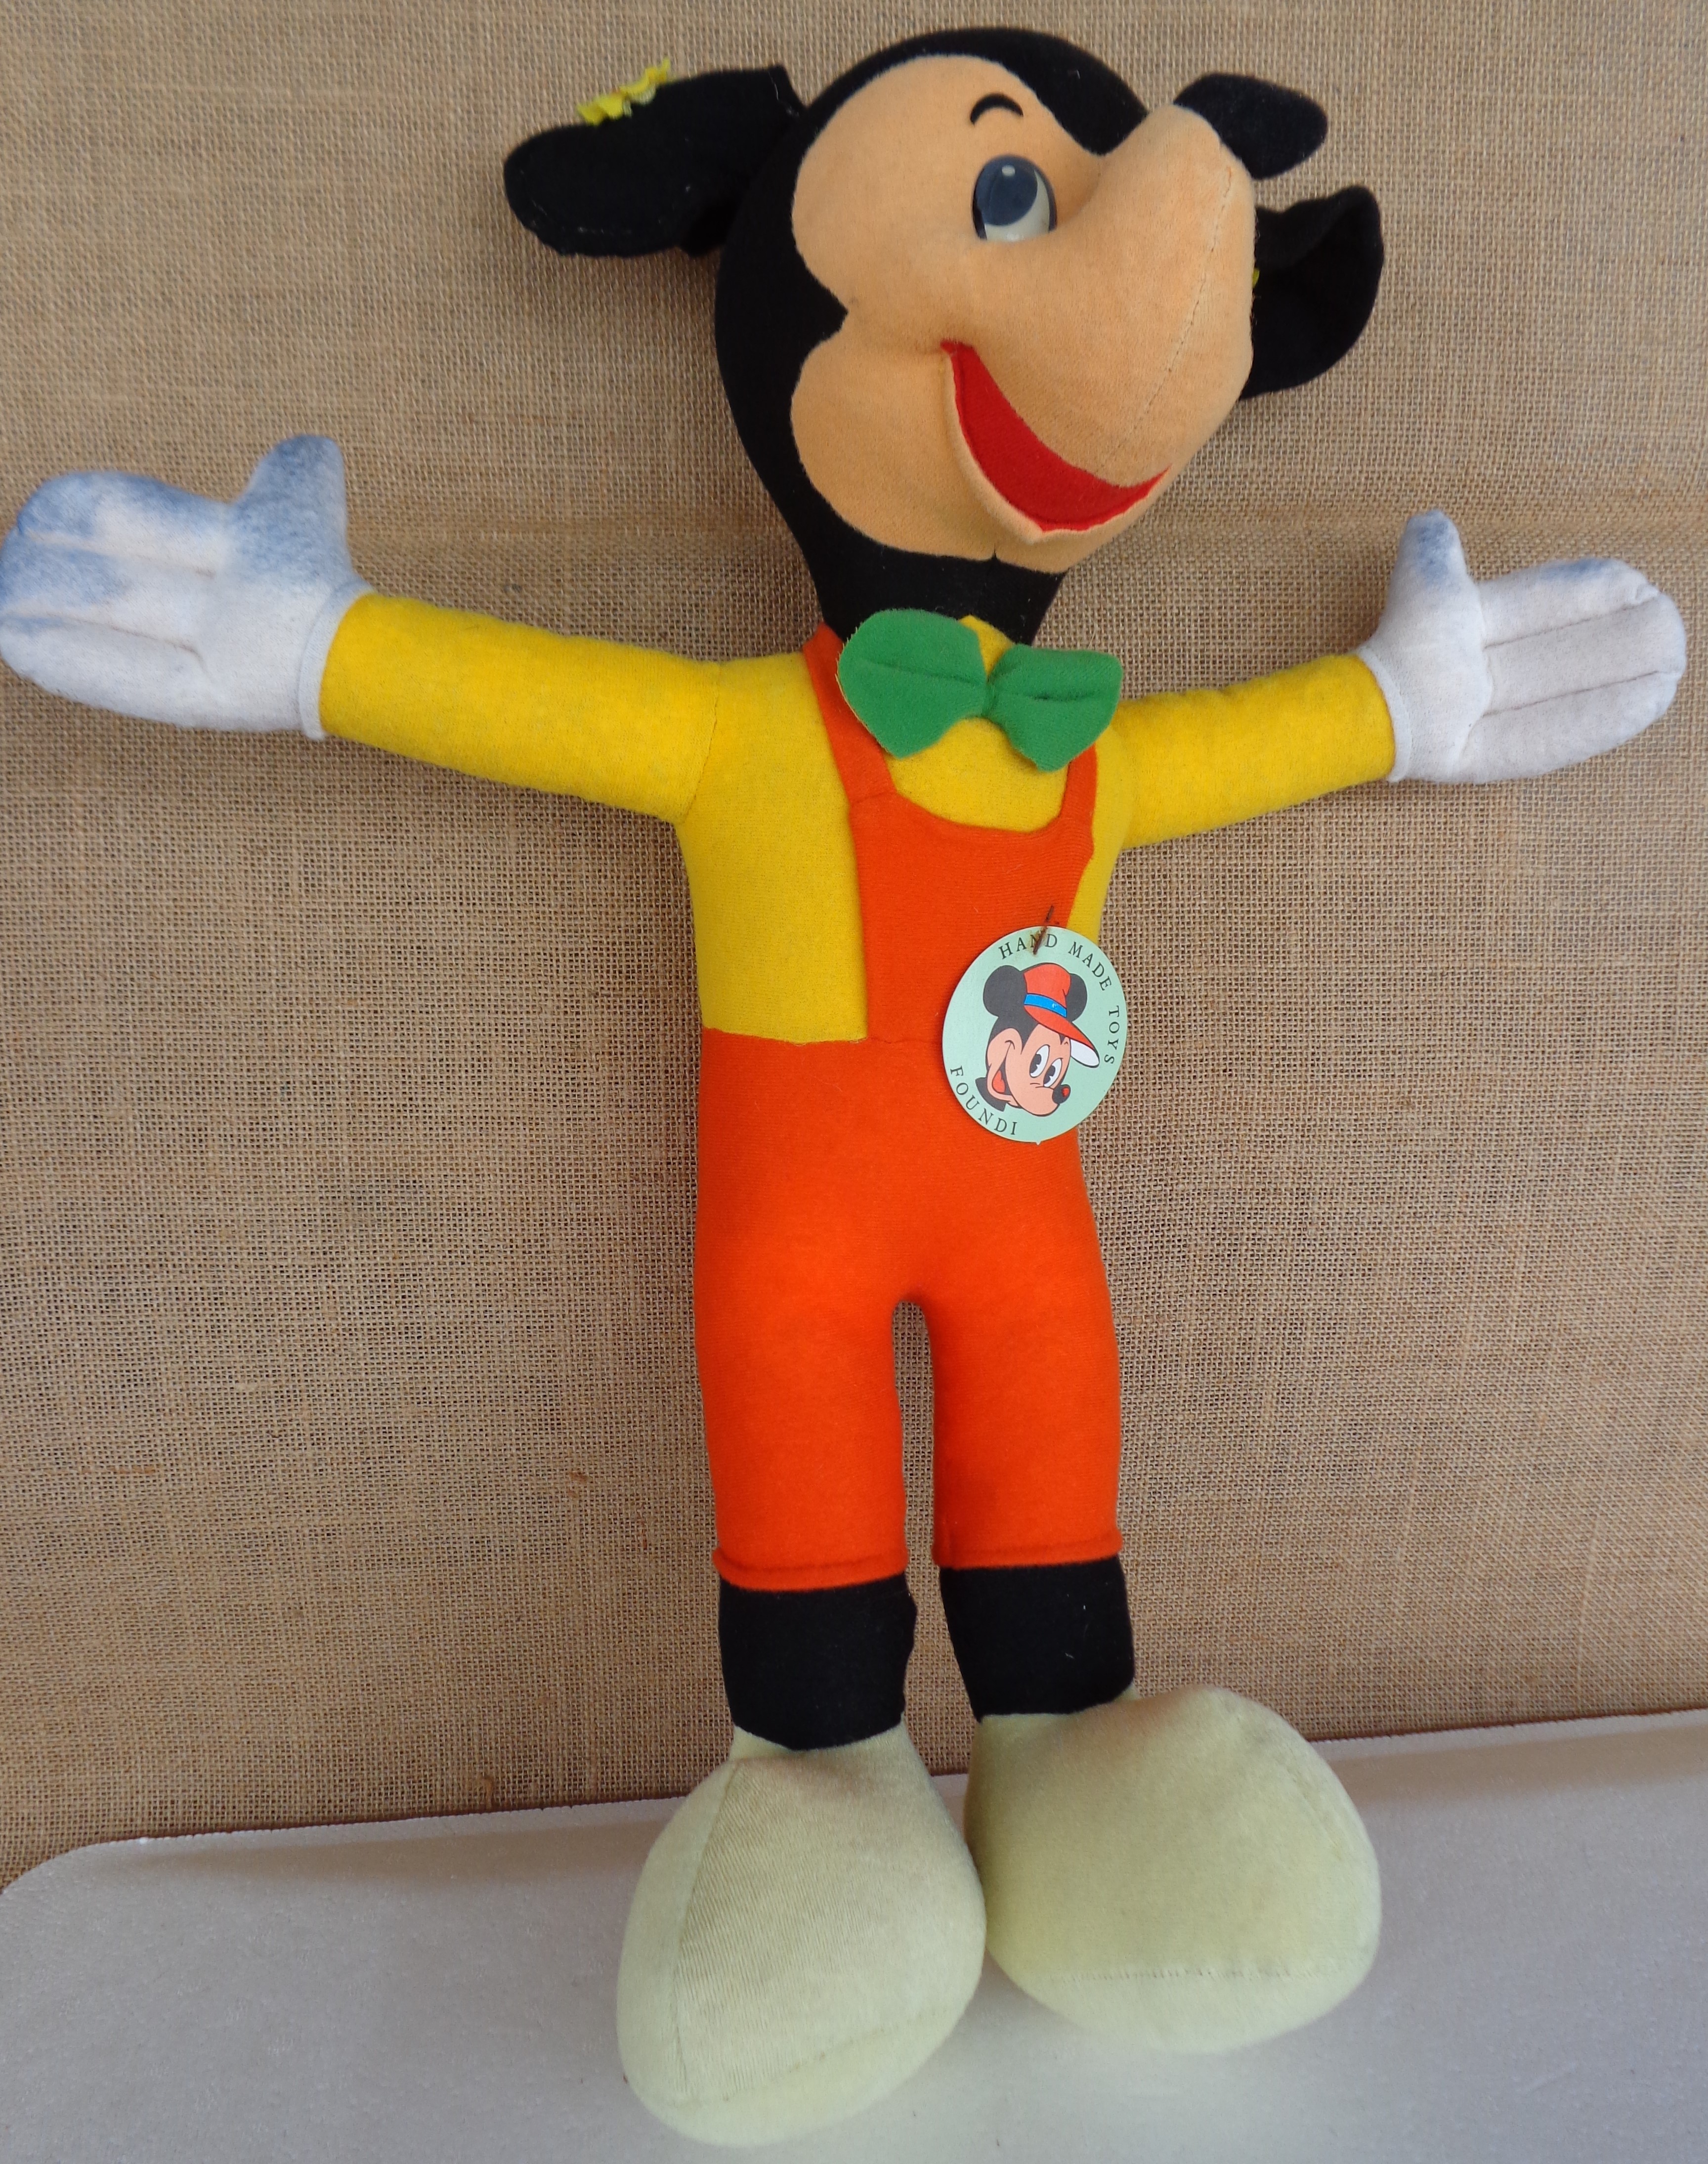 Vintage  Disney Mickey Mouse  ΕΛΛΗΝΙΚΟ ΠΑΙΧΝΙΔΙ ΜΙΚΥ ΜΑΟΥΣ FUNDIS TOYS Ύψος: 50 cm Disney Mickey Mouse.  